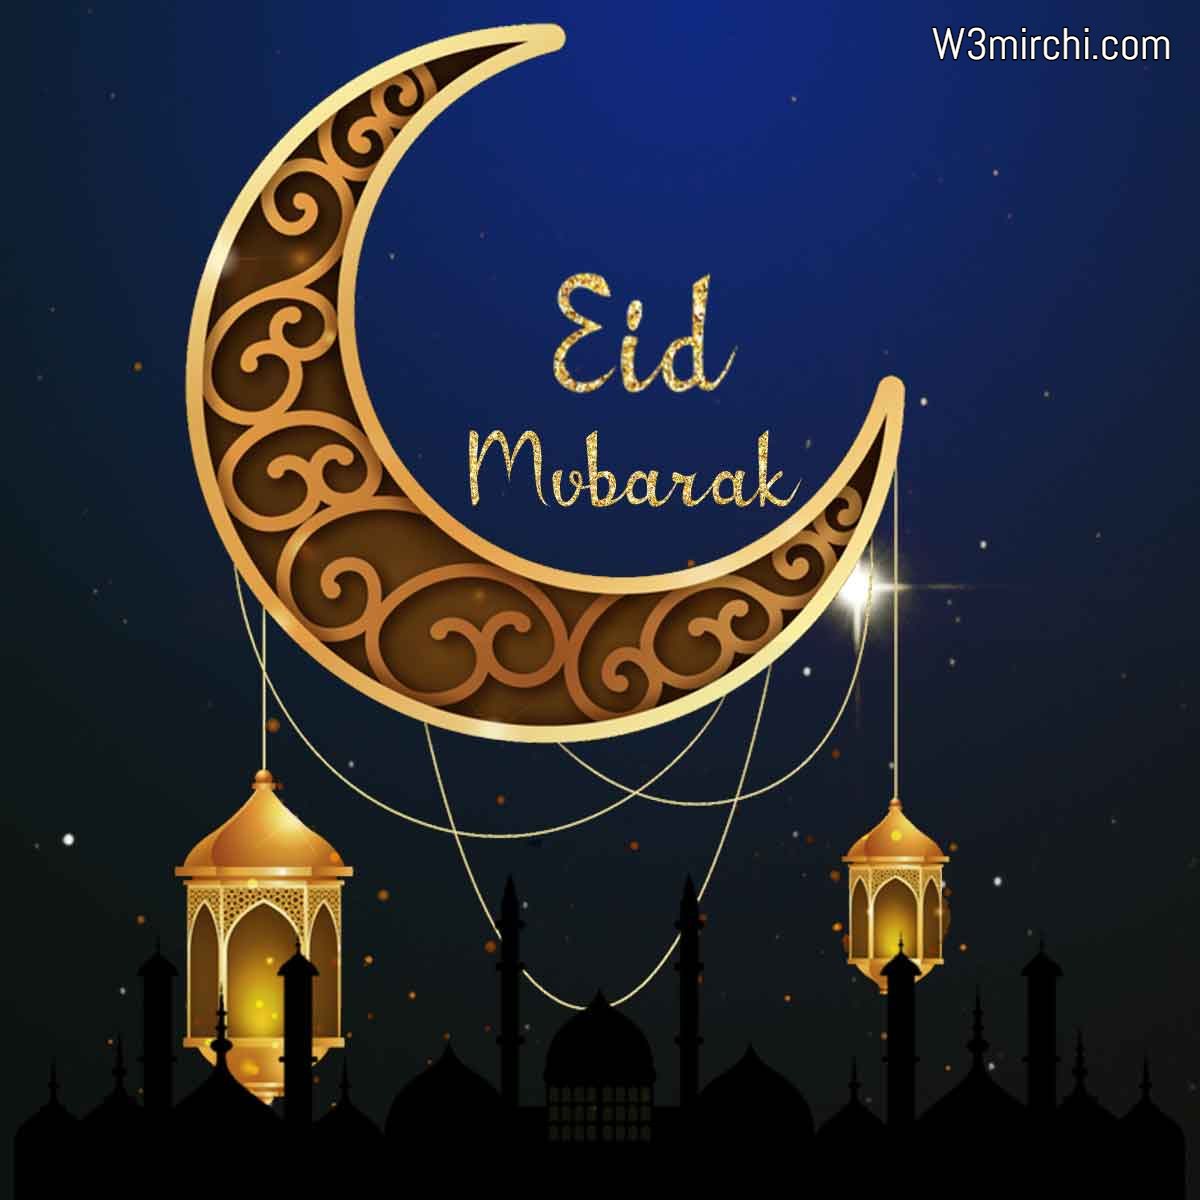 Eid Mubarak - Eid Mubarak Images In Hd